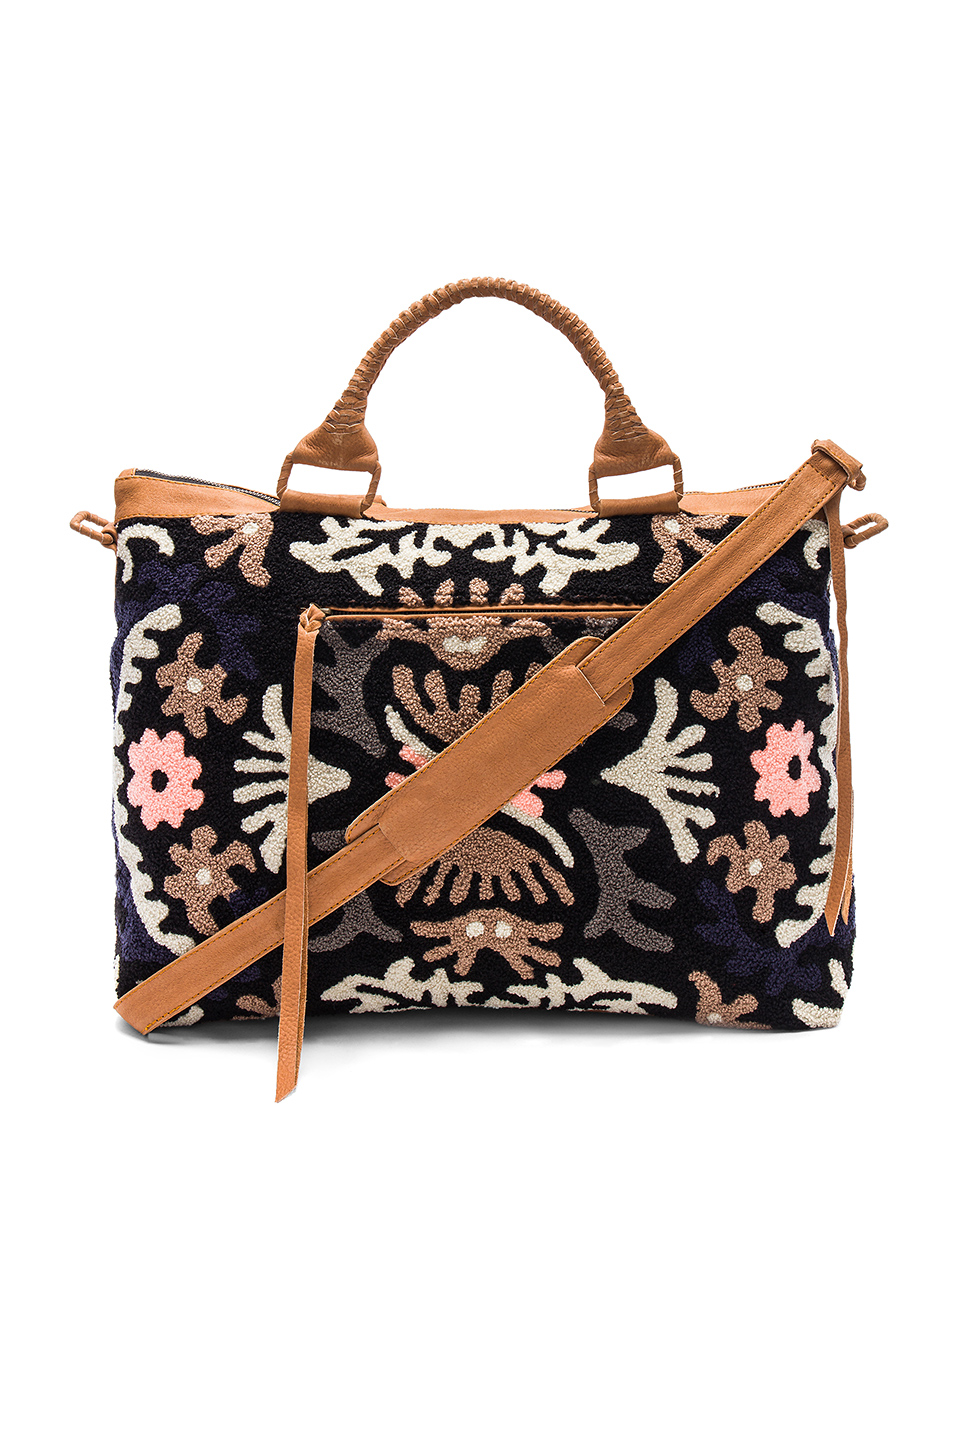 Cleobella Violetta Travel Bag In Black | ModeSens